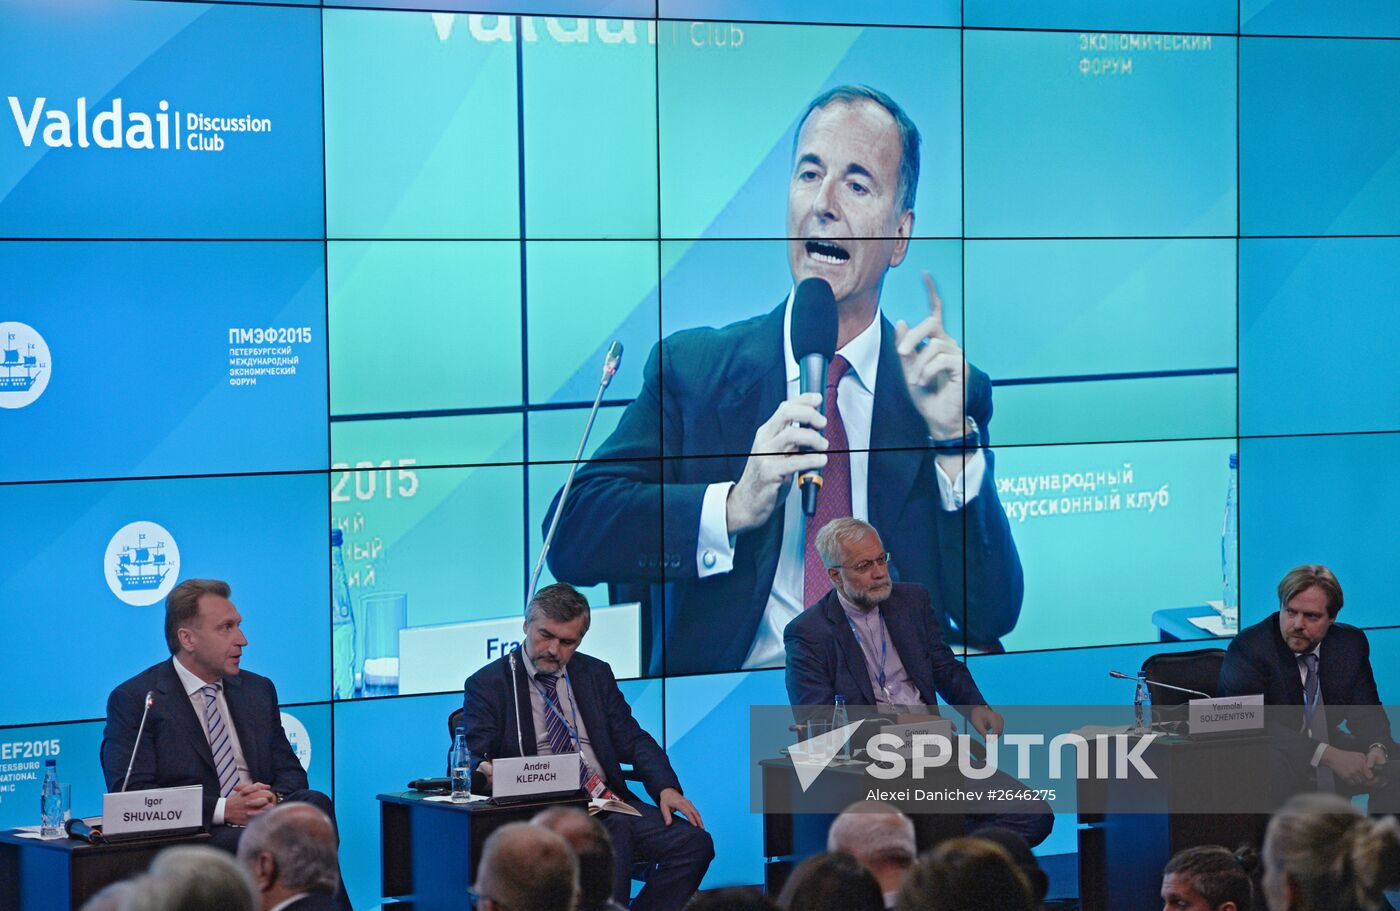 Valdai Club session, Economic Interdependence vs. Political Isolation, at 2015 St. Petersburg International Economic Forum